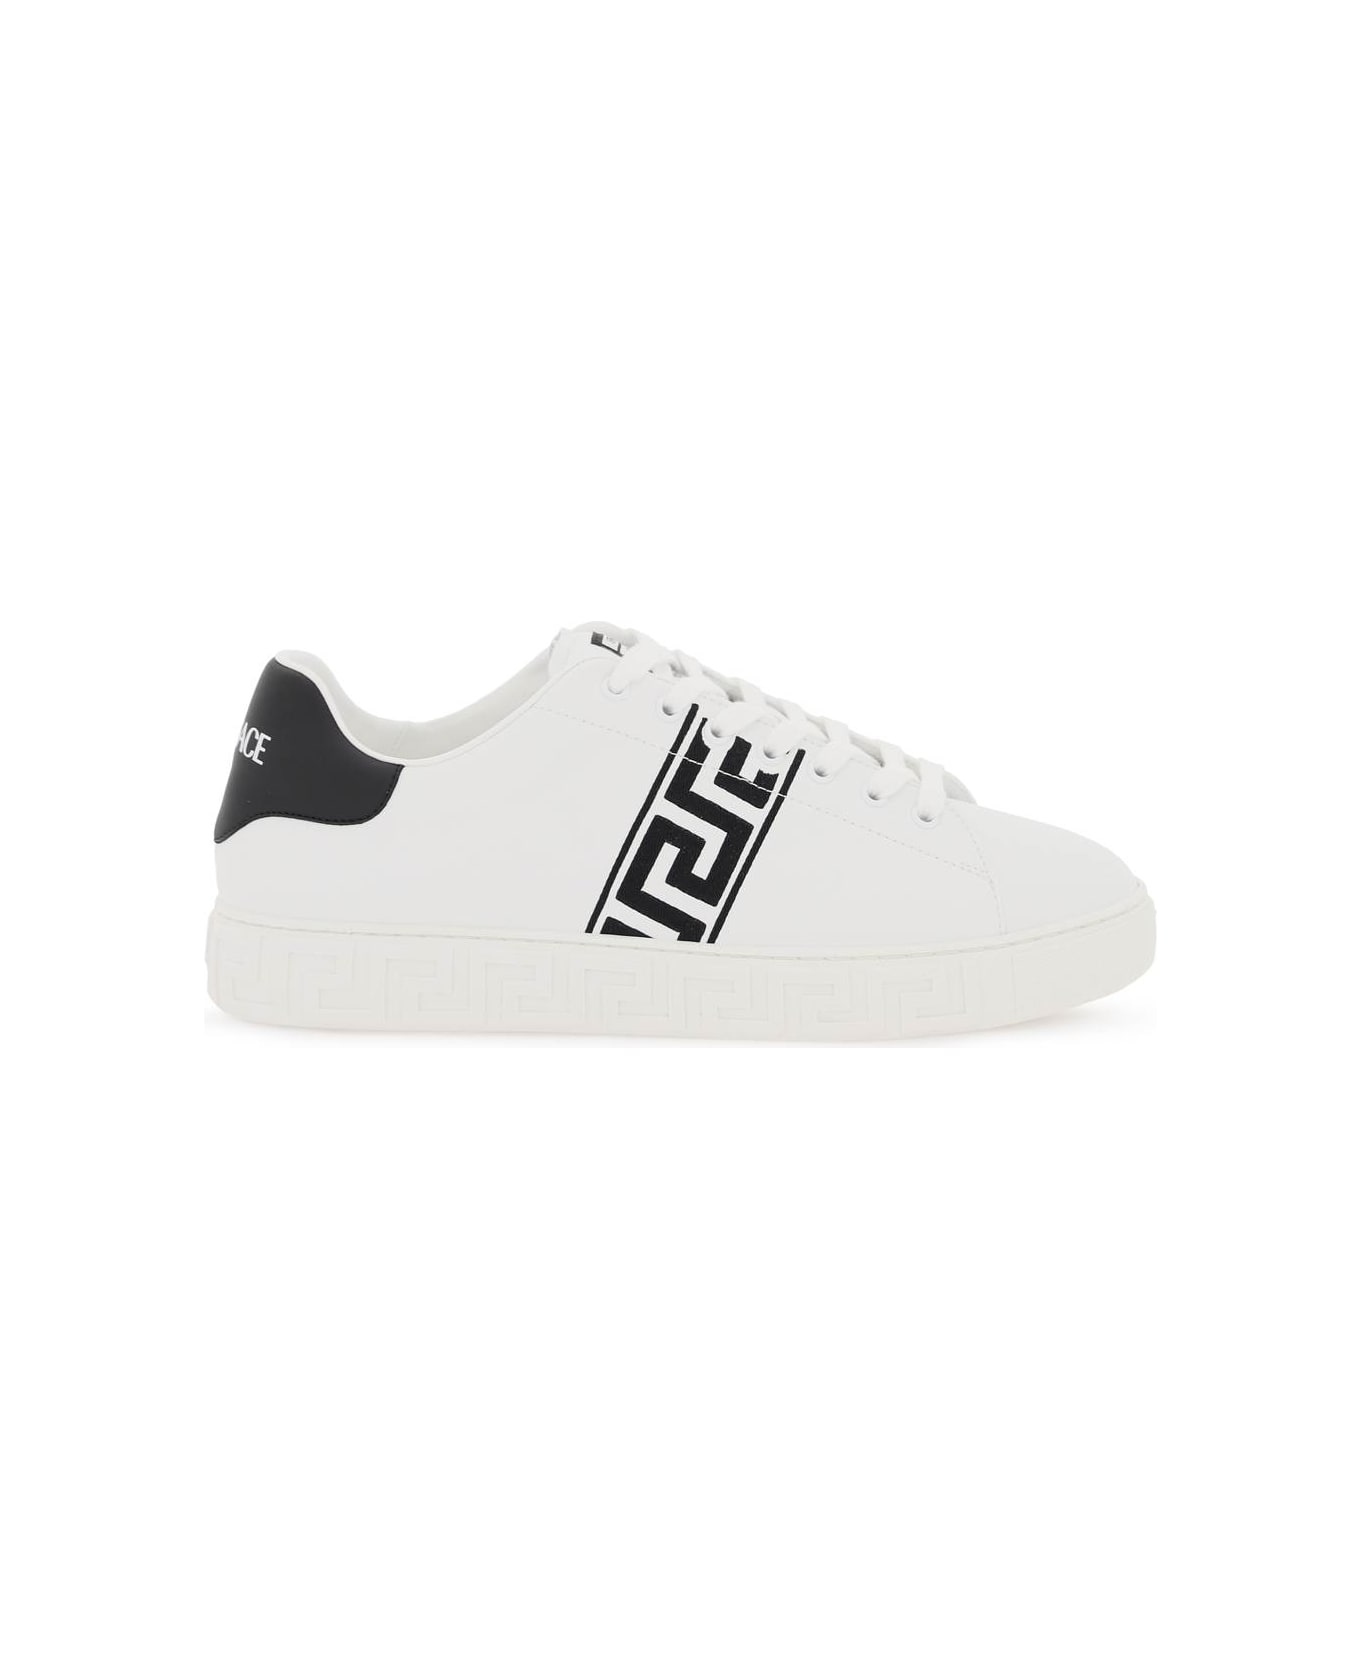 Versace Low Top Sneakers - White